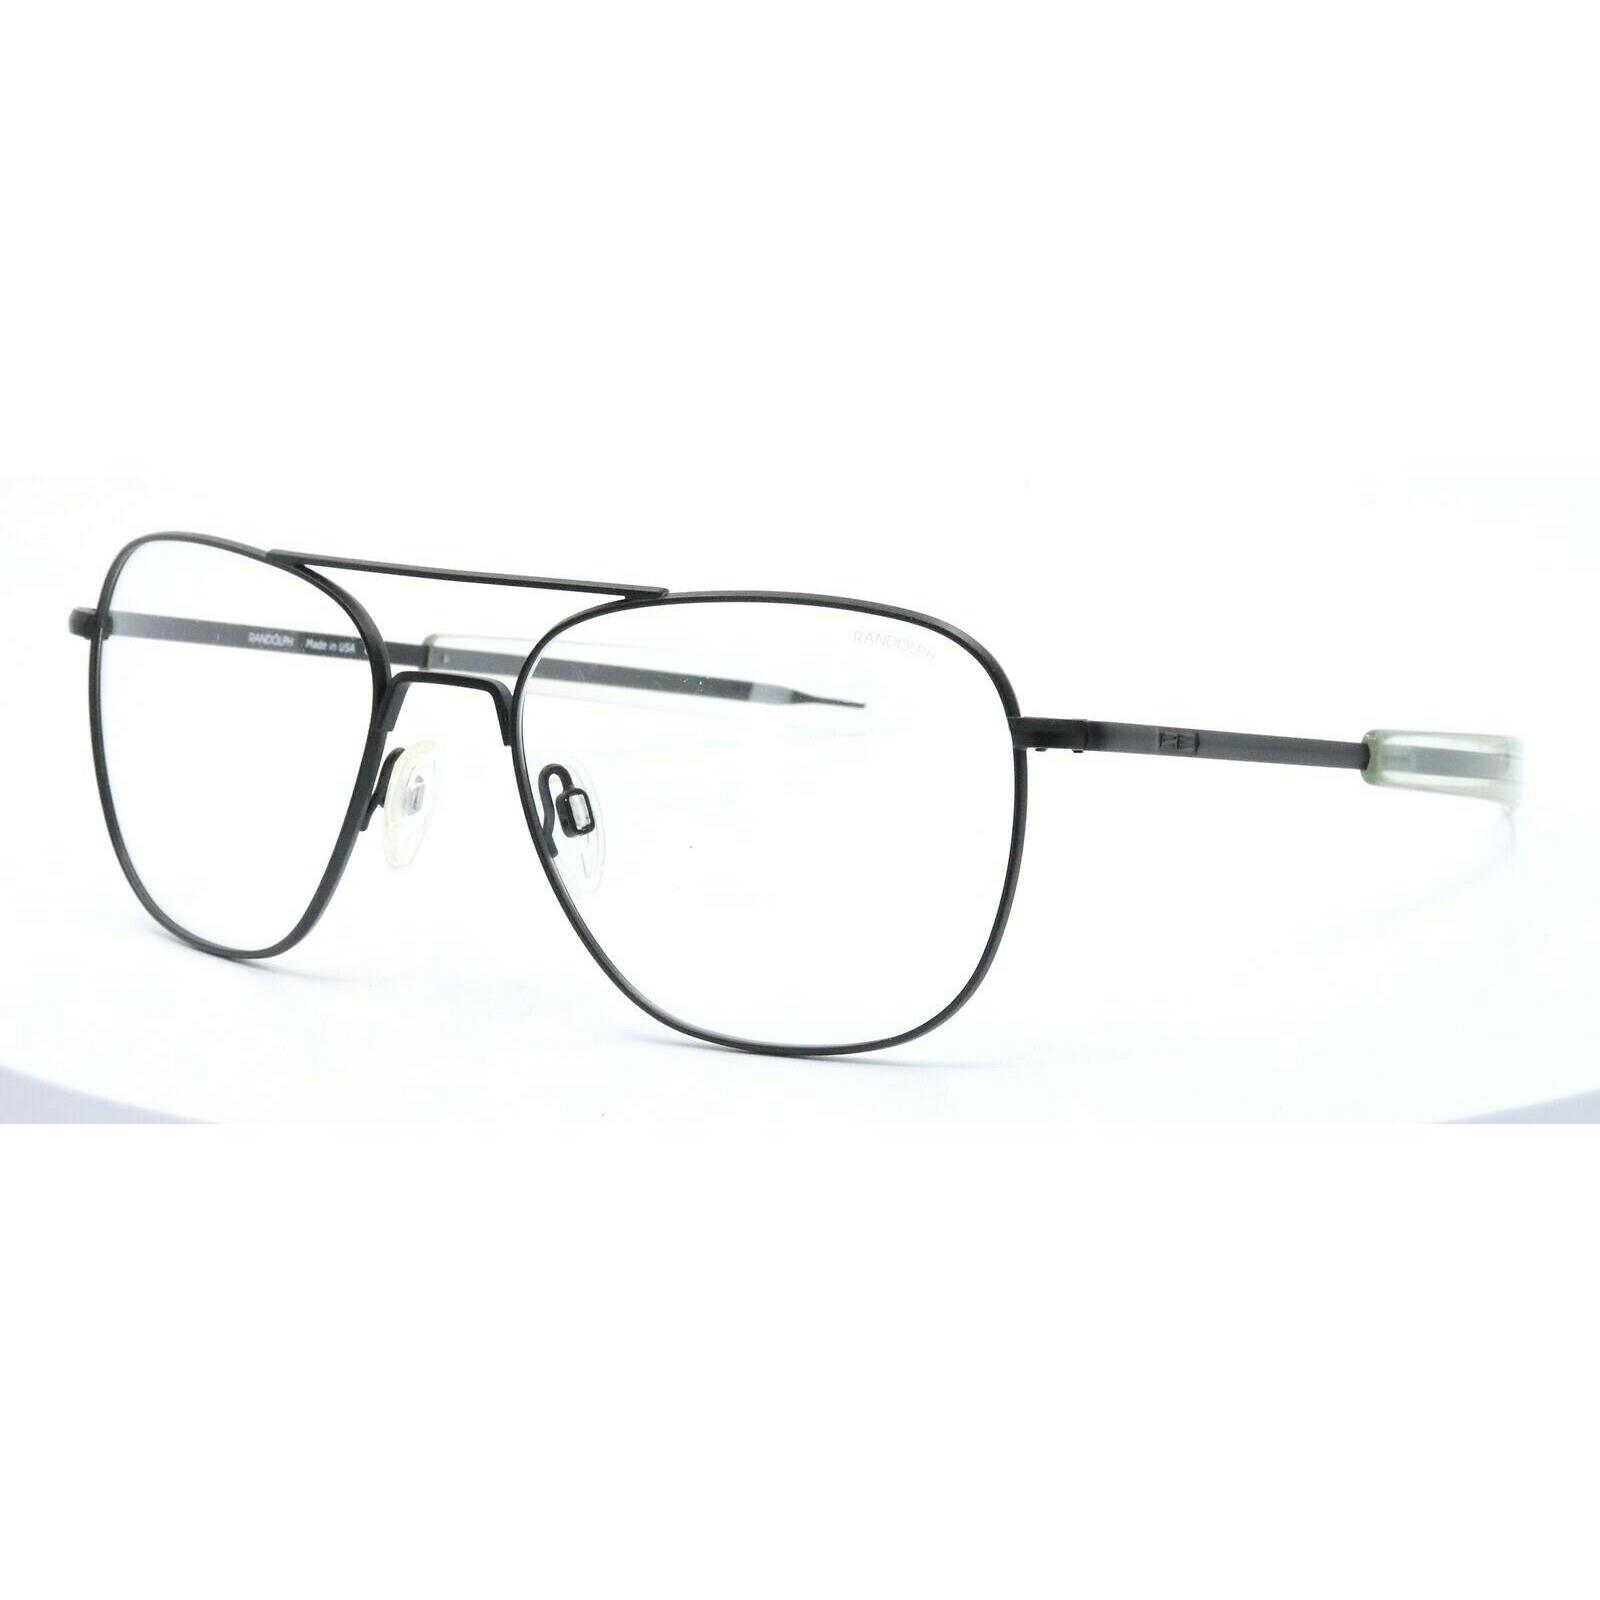 Randolph Engineering Aviator Matte Black Eyeglasses Frames 58-20-140 w/ Case Usa